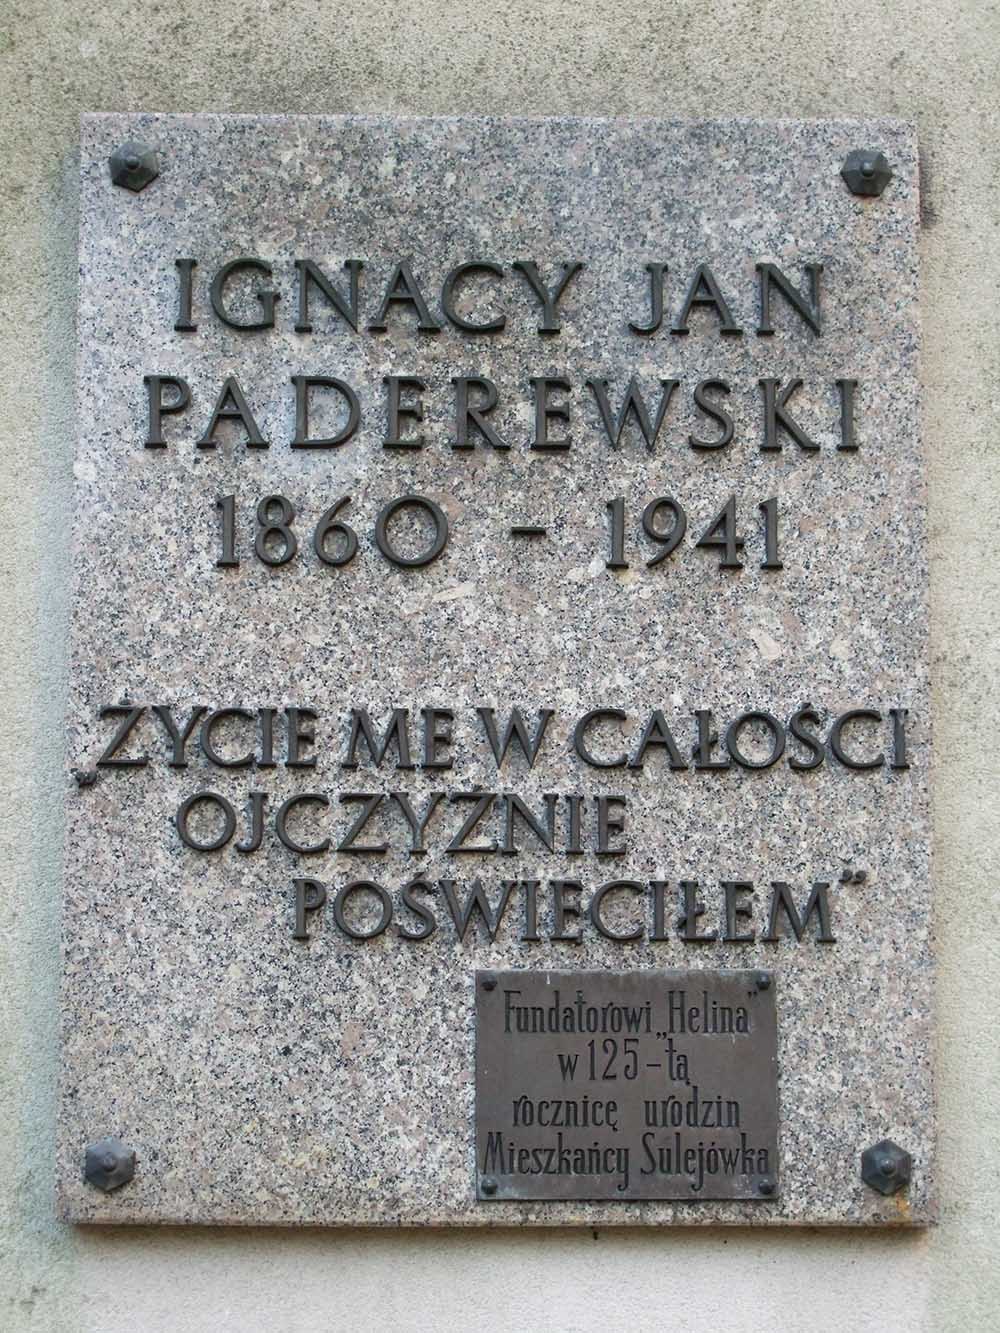 Voormalige Villa Ignacy Paderewski